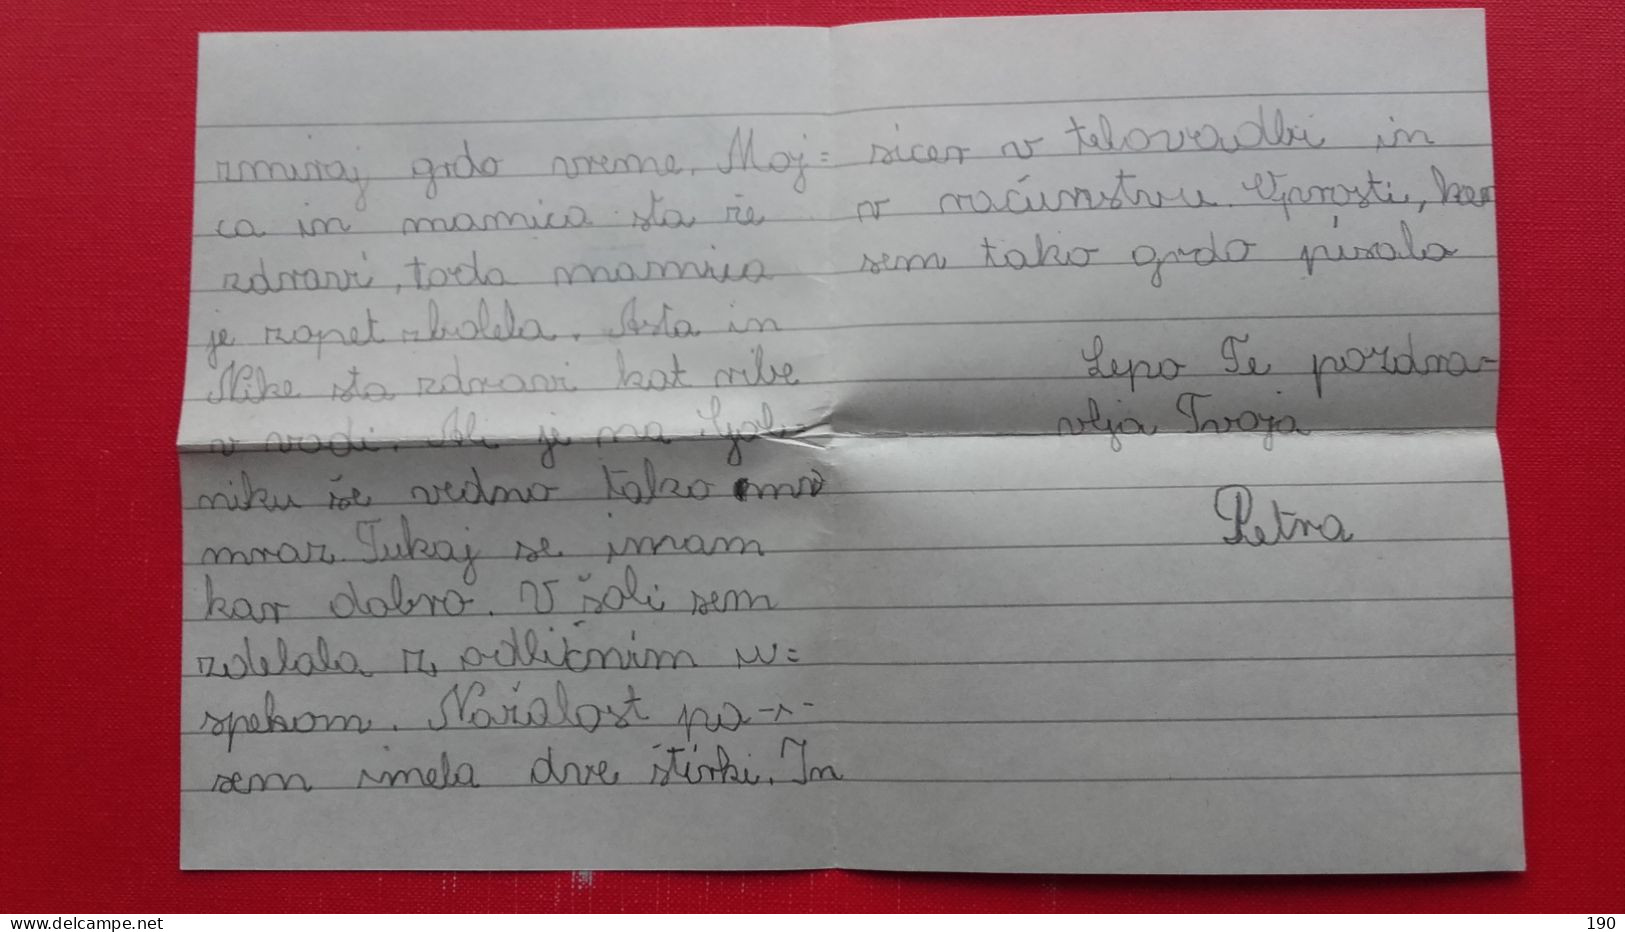 Letter Sent From Ljubljana To Golnik.Written By Child.Strojni Zig - Covers & Documents